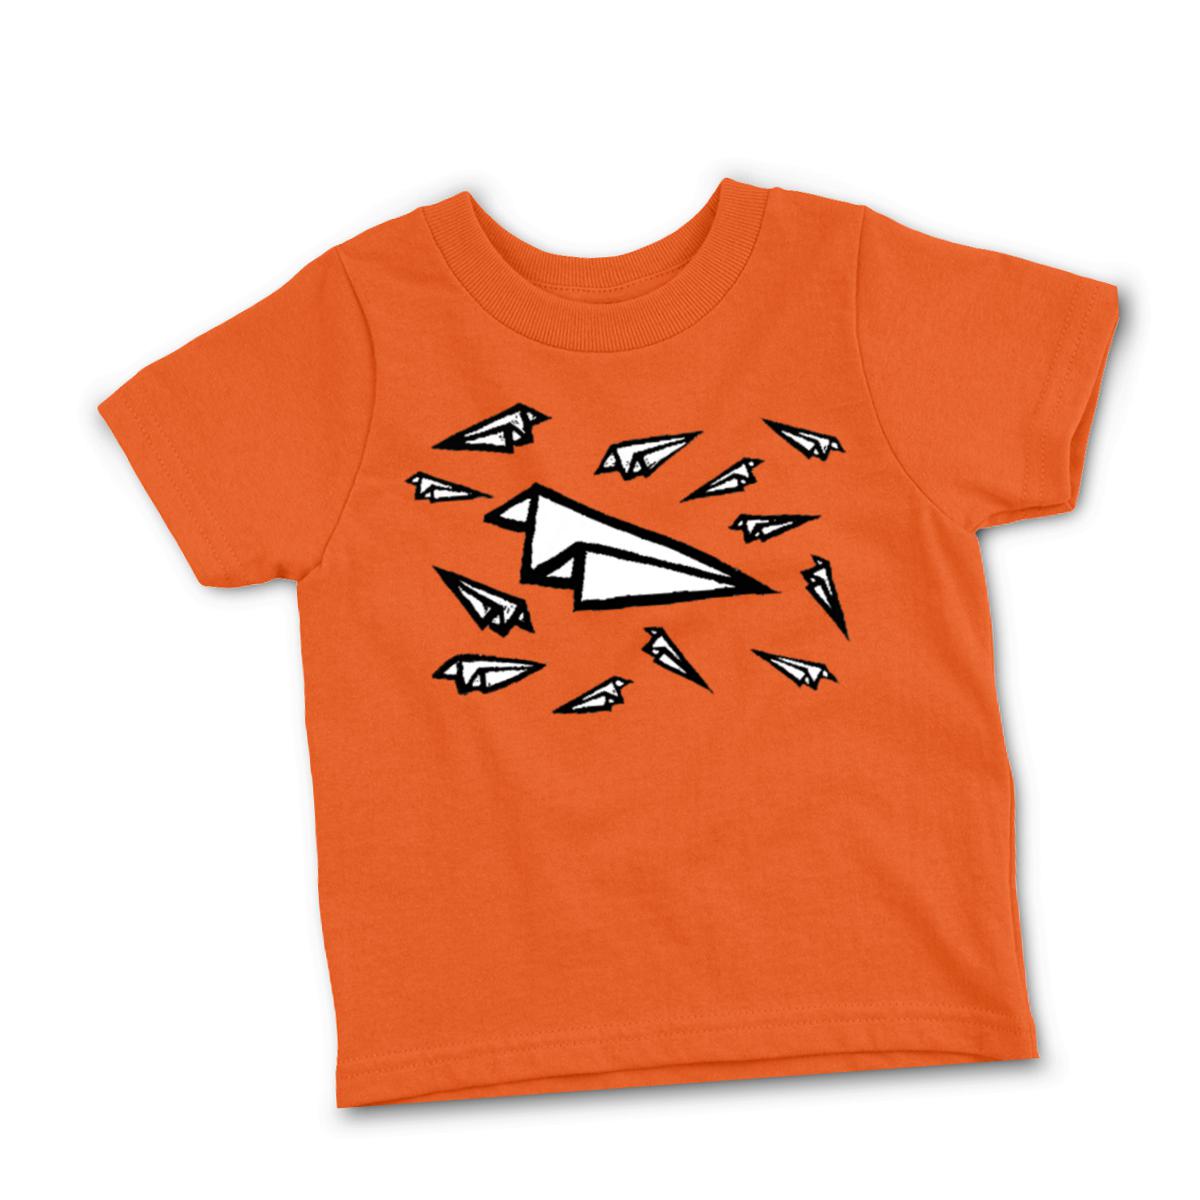 Airplane Frenzy Toddler Tee 56T orange